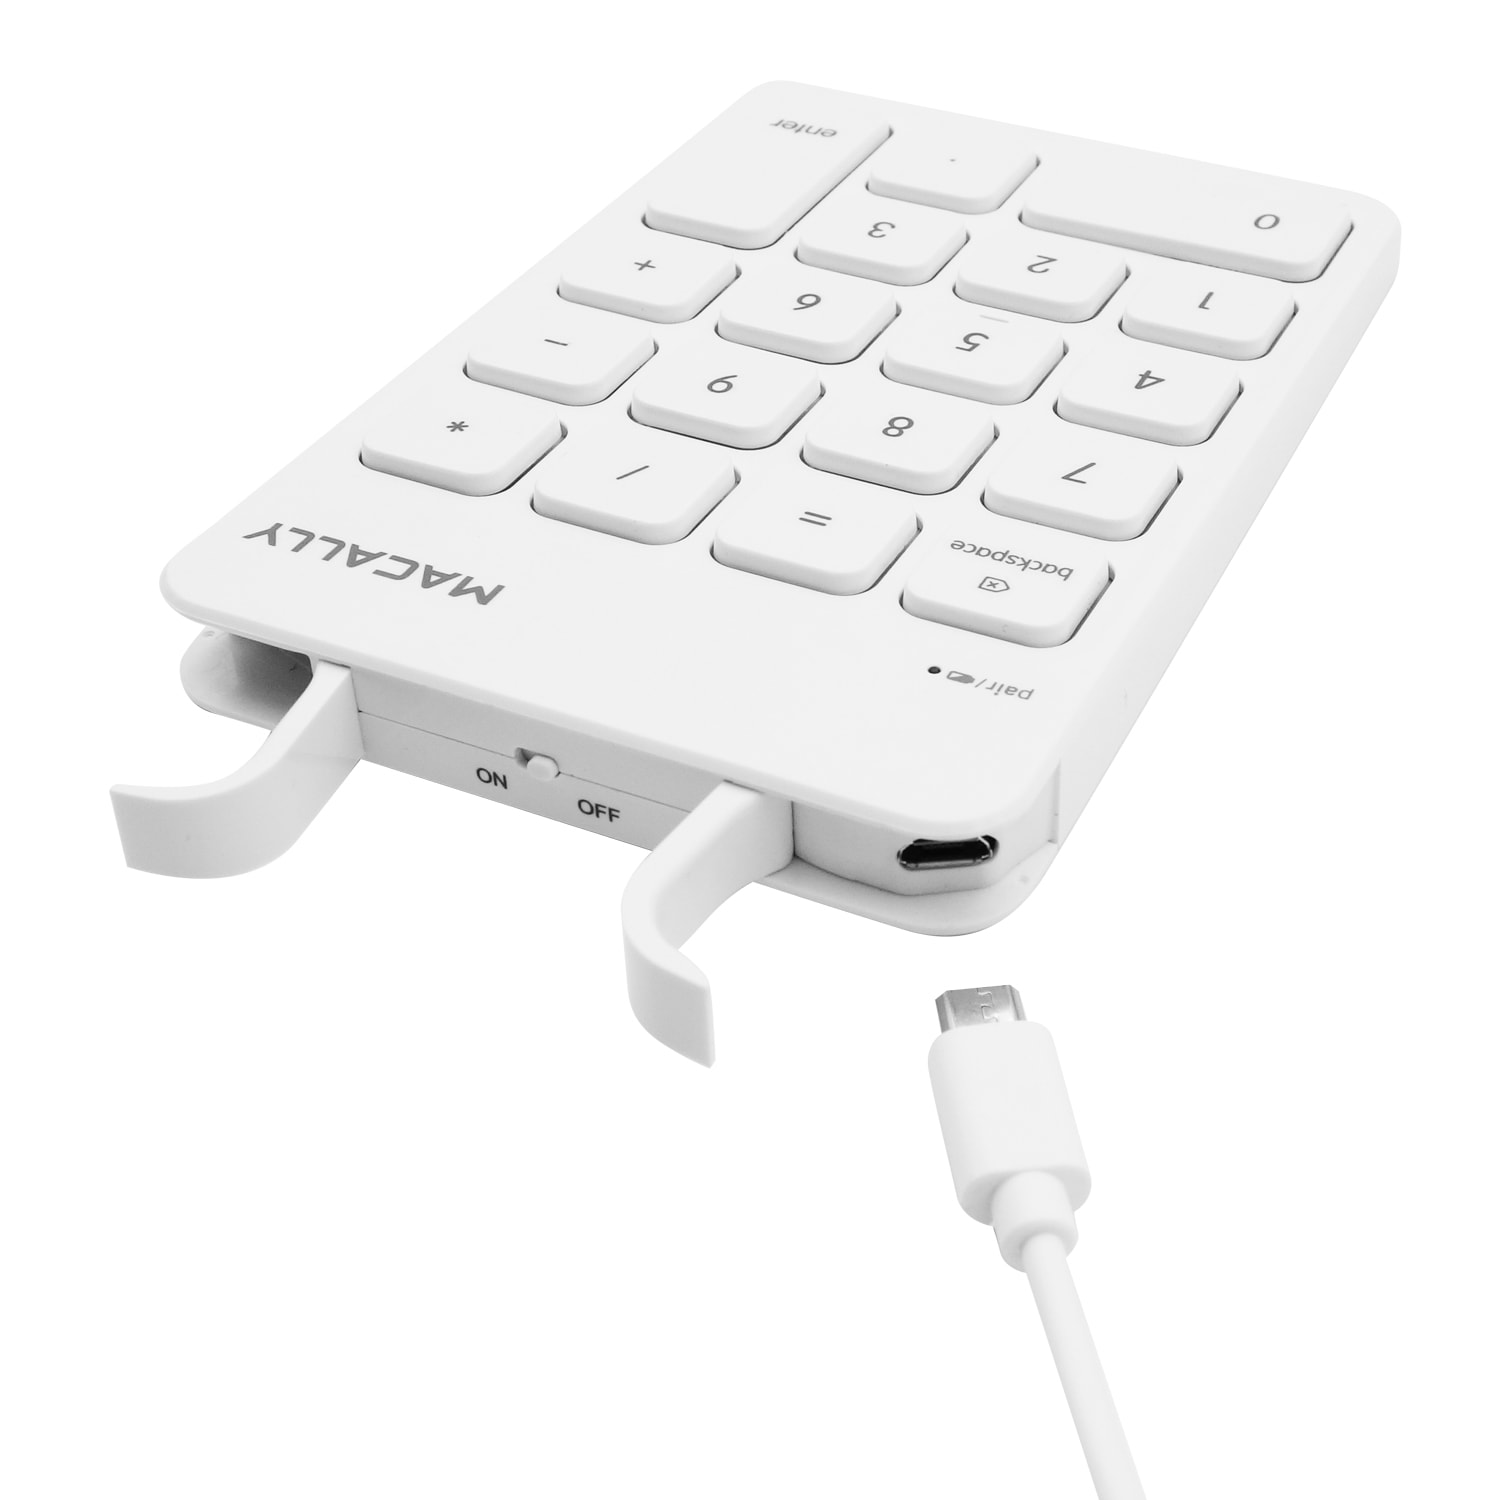 Numeric Keypad Wireless Number Pad Keyboard for Apple Mac Laptops